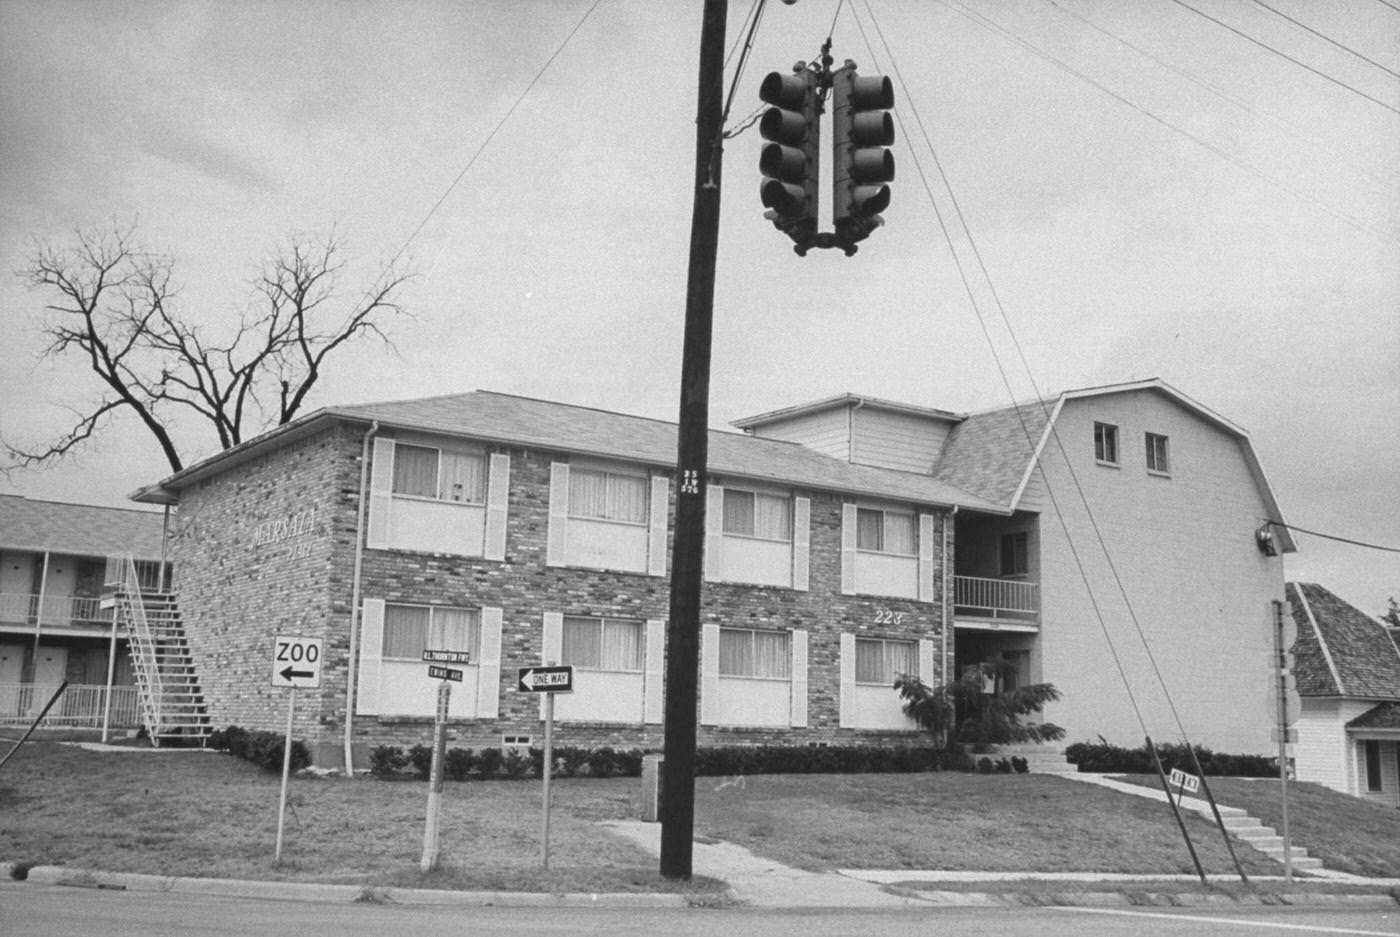 Oak Cliff apts. in Dallas where Jack Ruby lived, 1960s